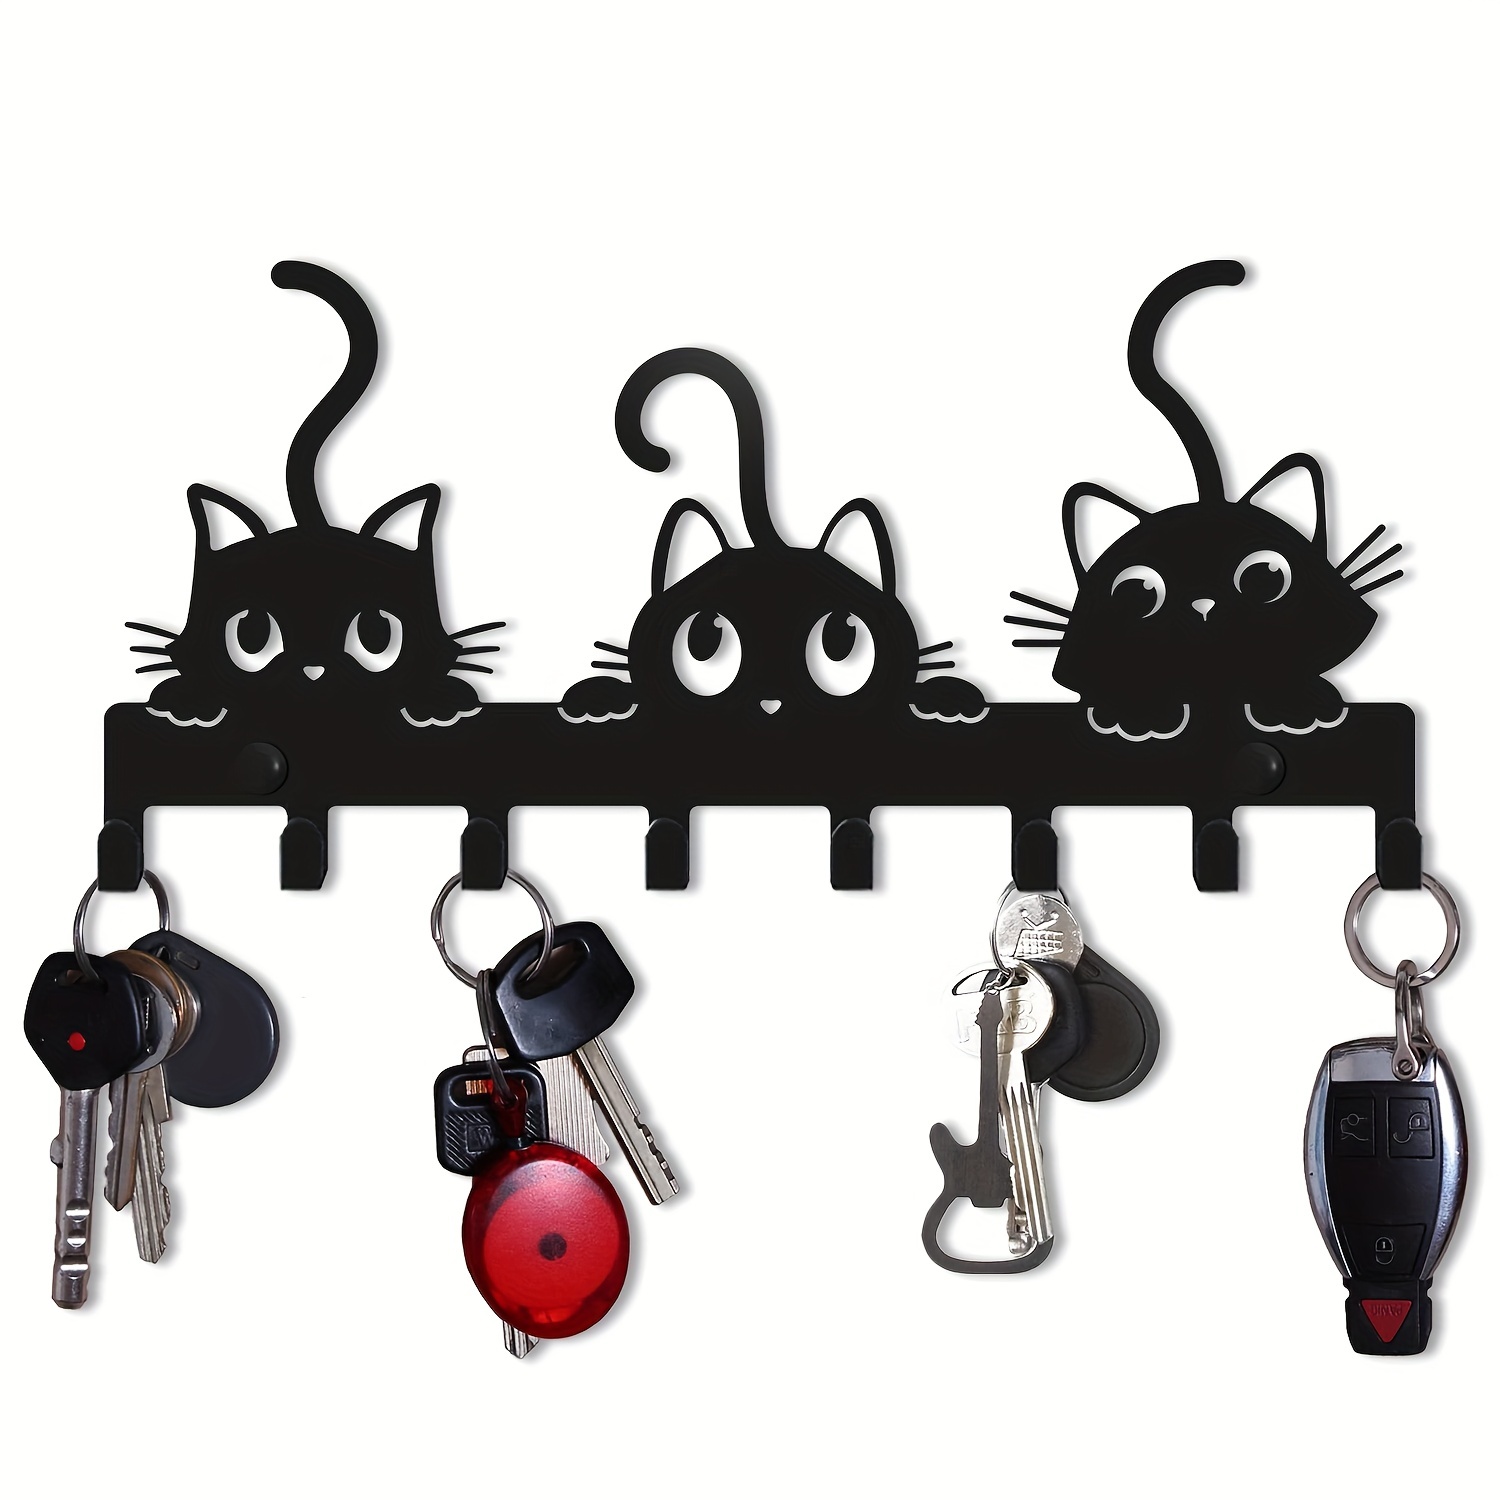 

1pcs Cute Cat Key Rack, Wall Mounted Key Holder, Halloween Festive Atmosphere, Black Cat Wall Rack Hook, Household Key Coat Hanger Hook, For Home Room Wall Decor